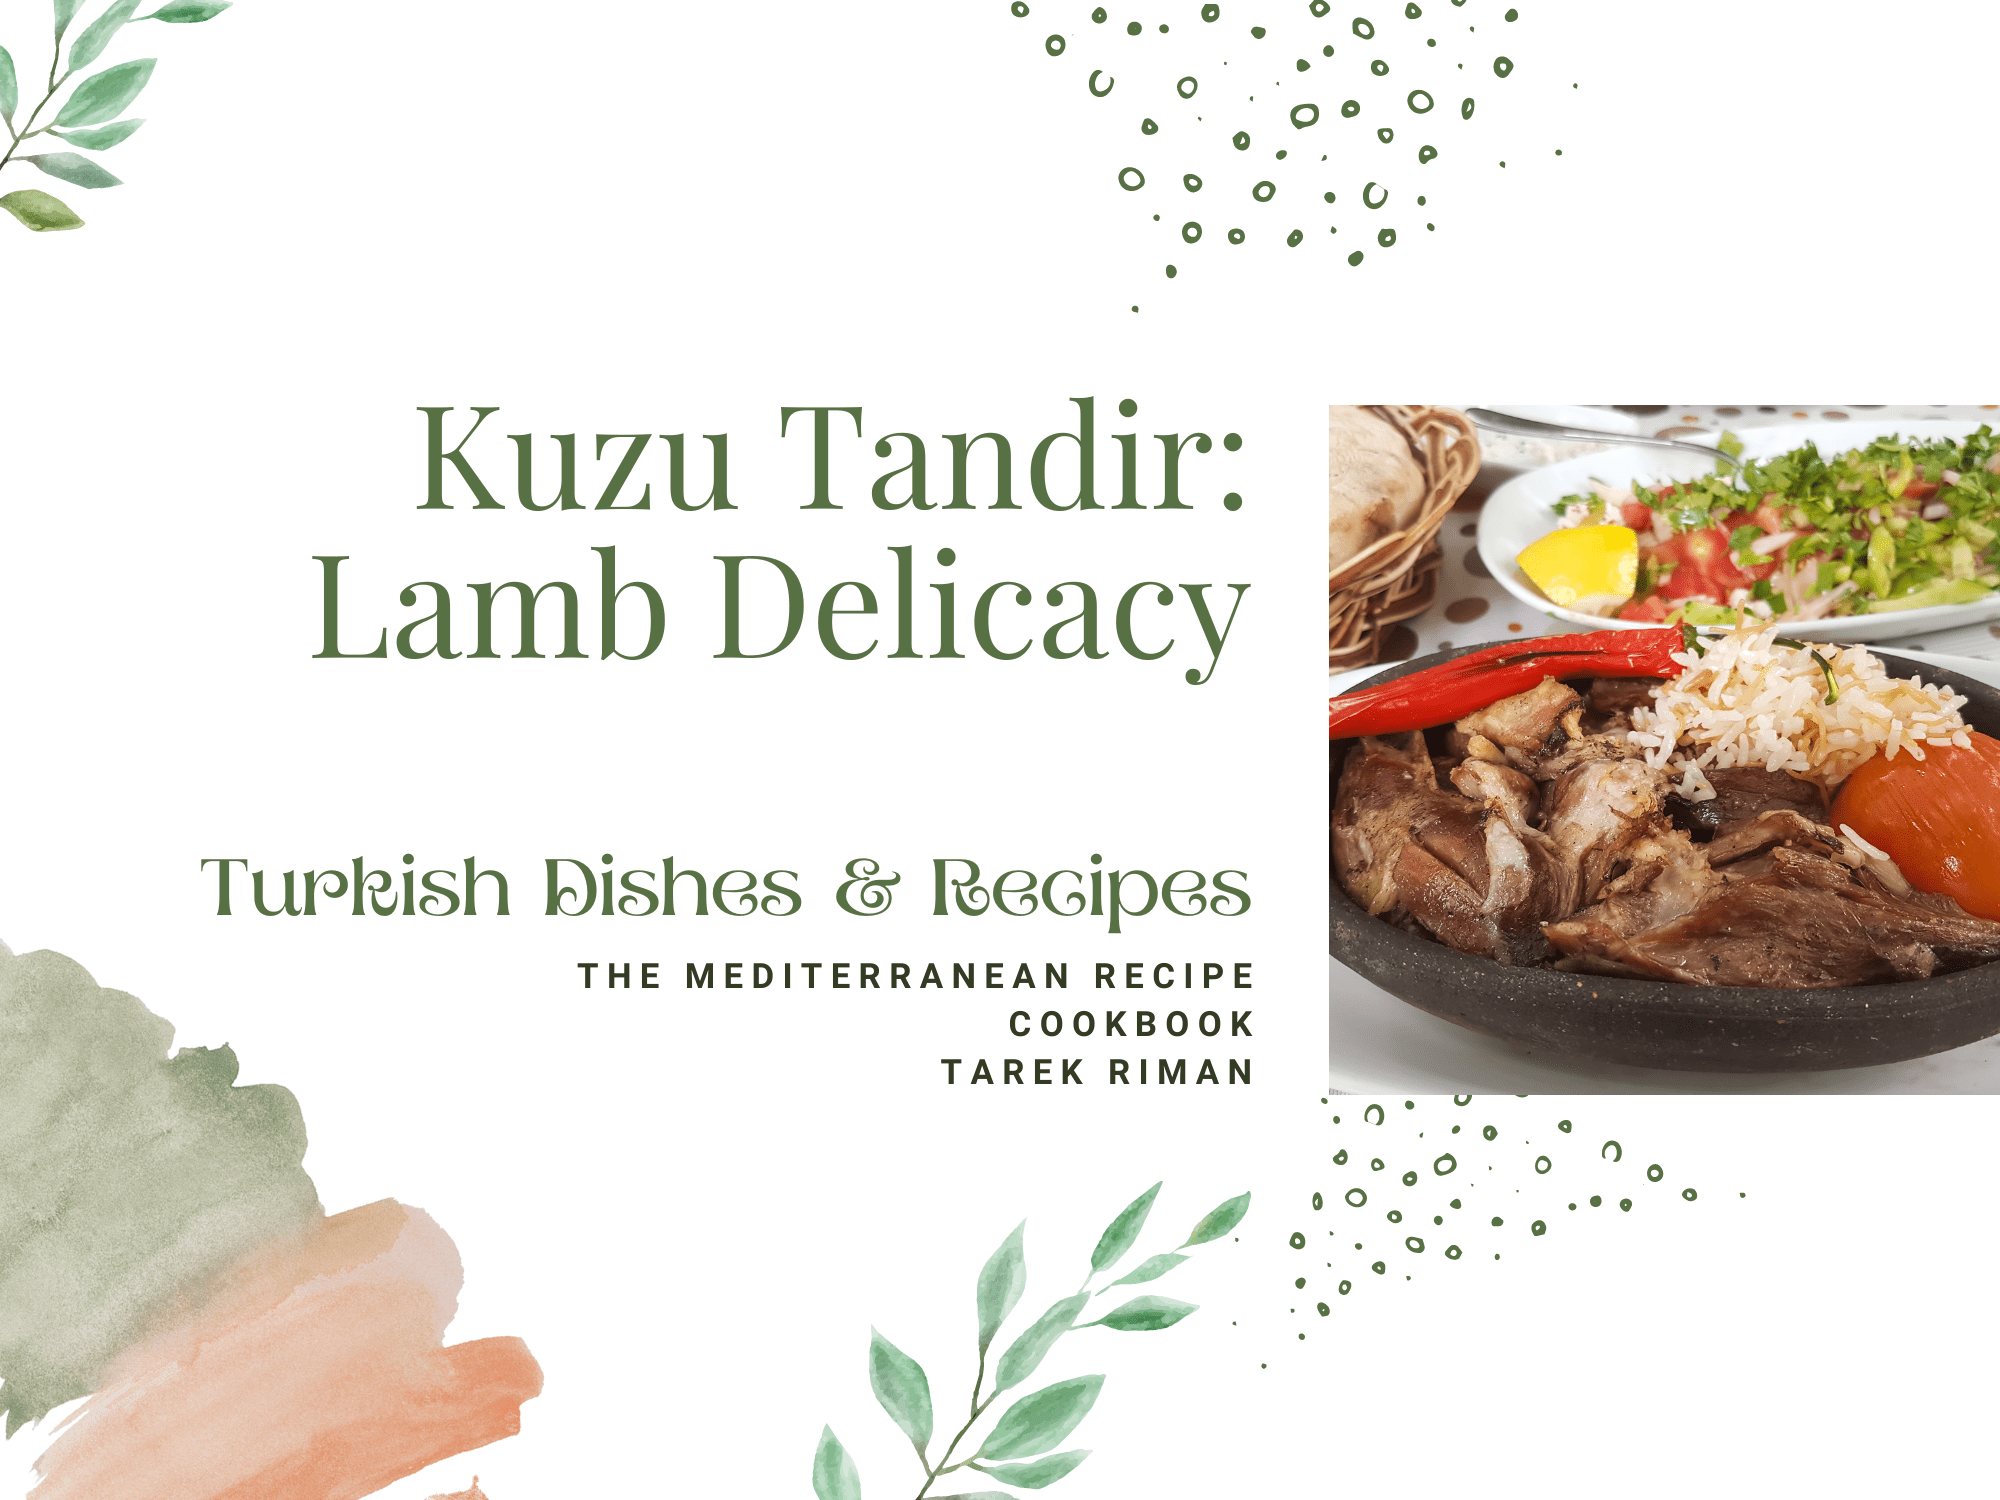 Kuzu Tandir: Lamb Delicacy